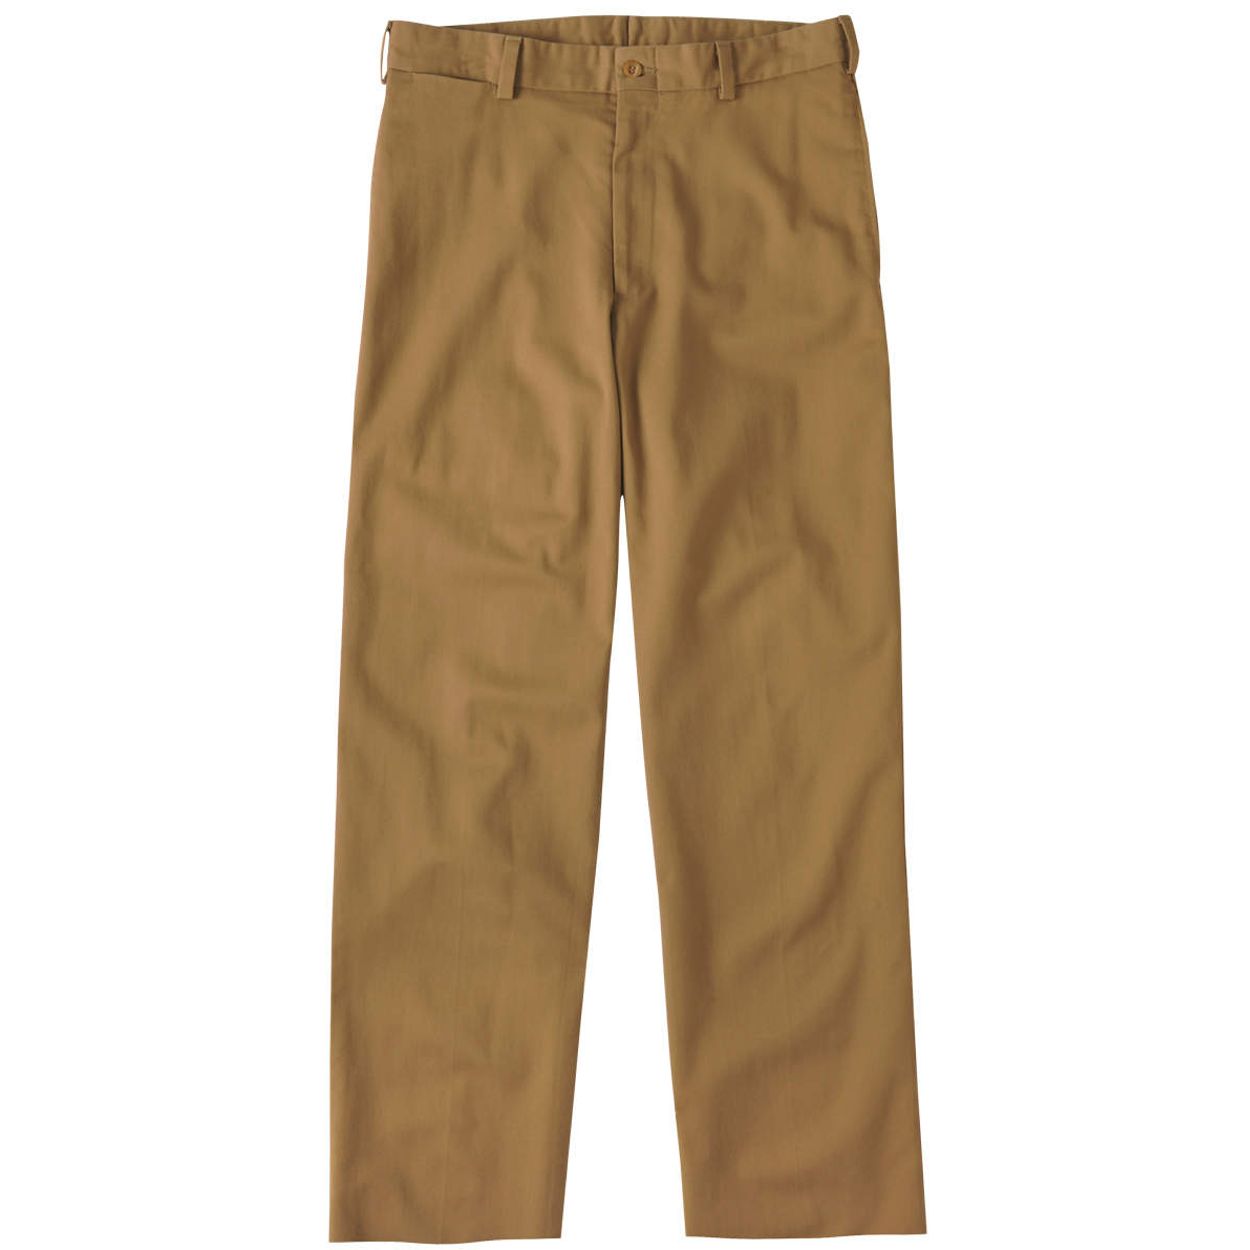 Lapco FR 7oz 100% Cotton Twill FR Uniform Pants Khaki - PINK